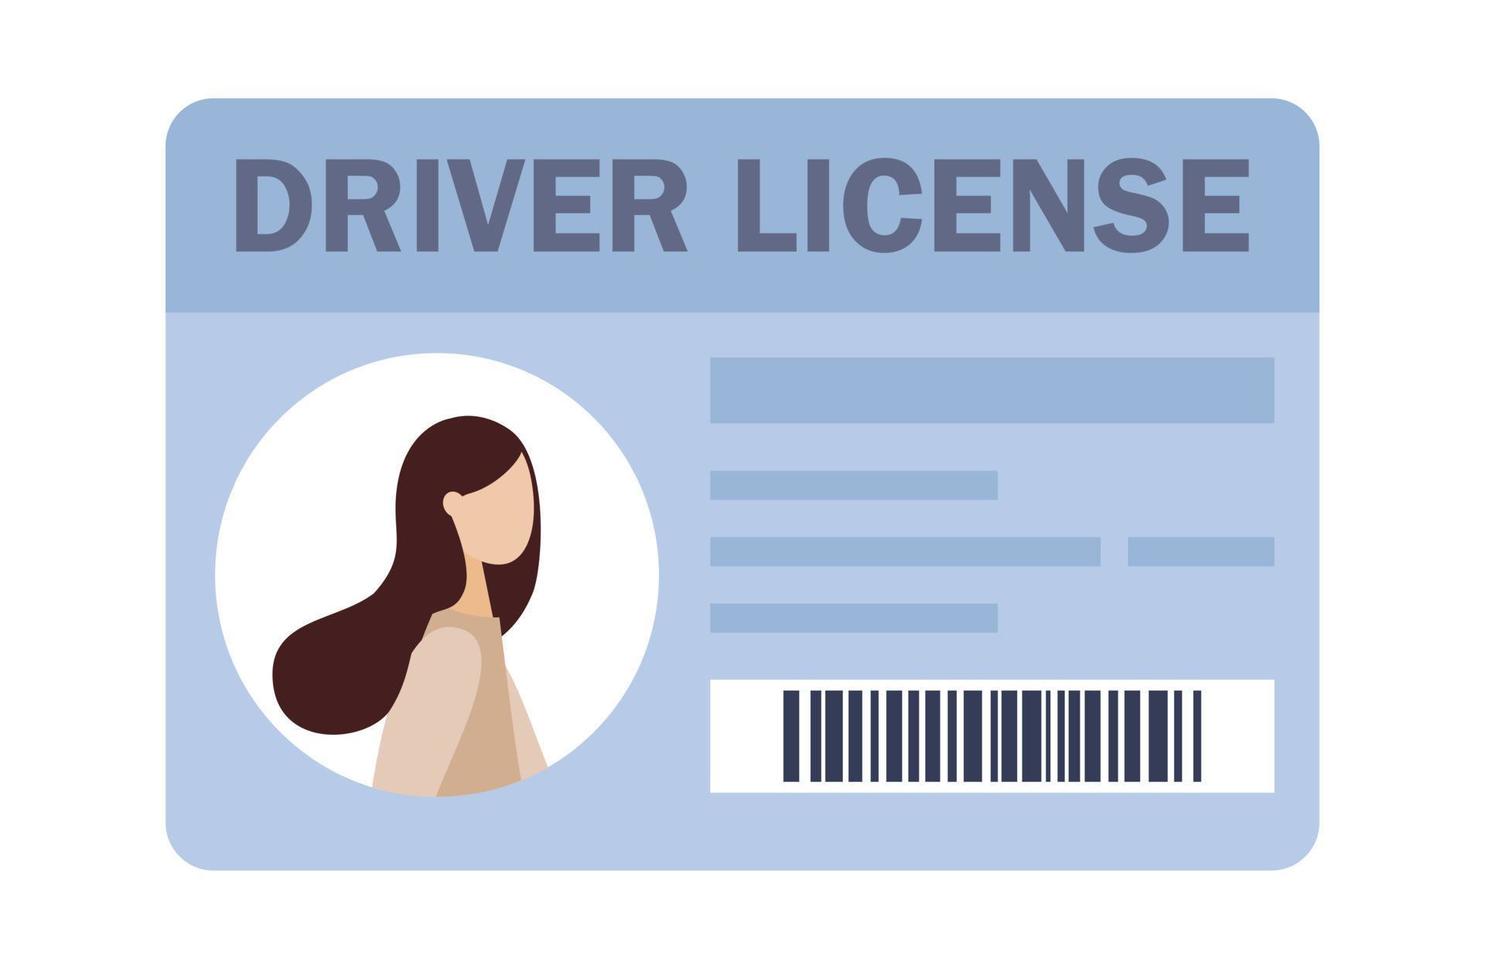 Driver's license icon. Identity card, identity verification, personal data. Vector flat illustration